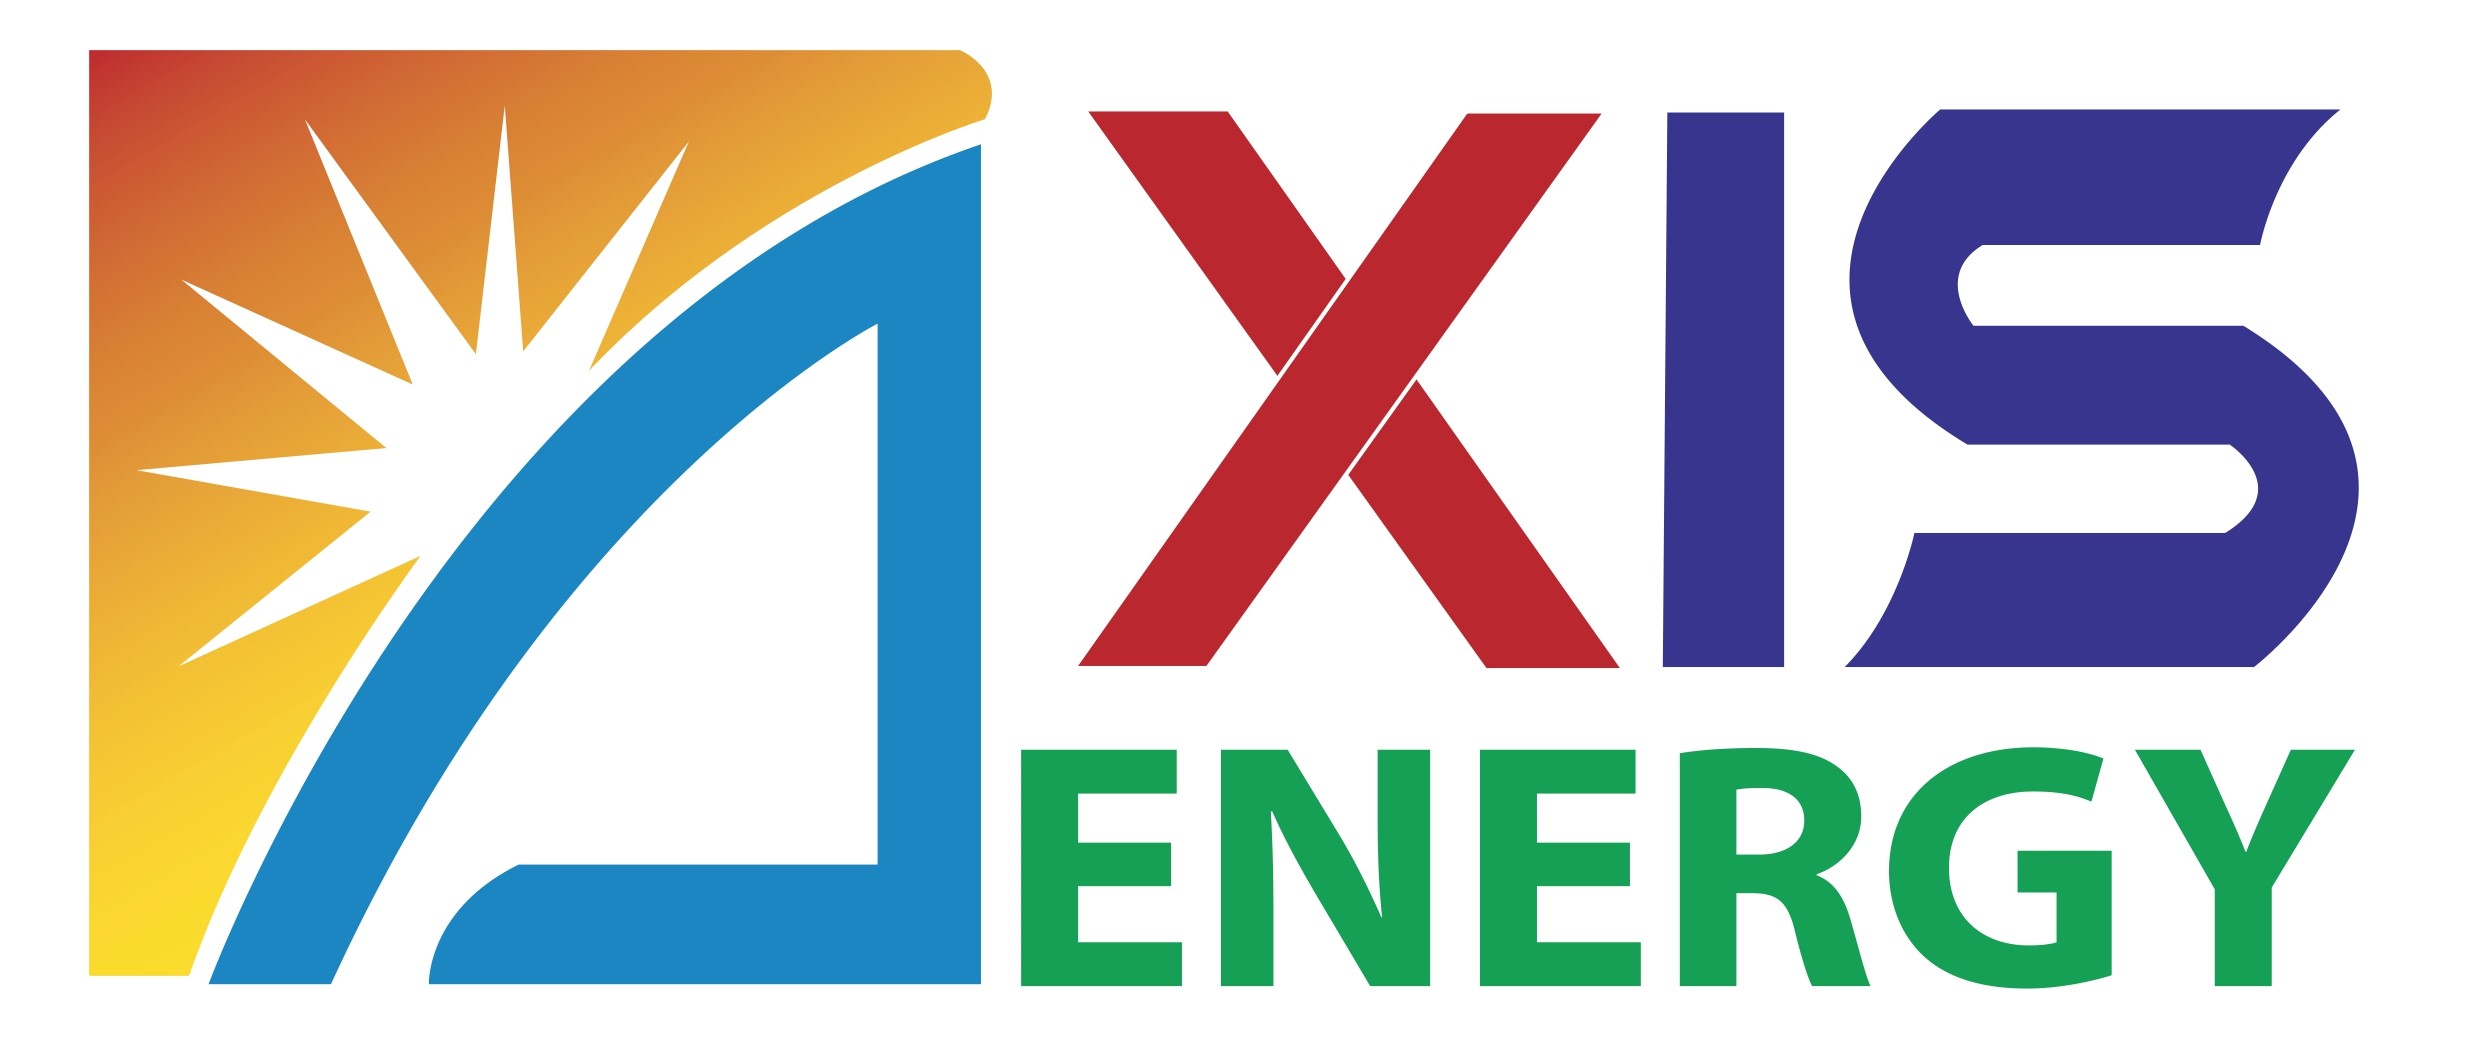 AXIS Energy Ltd. Logo